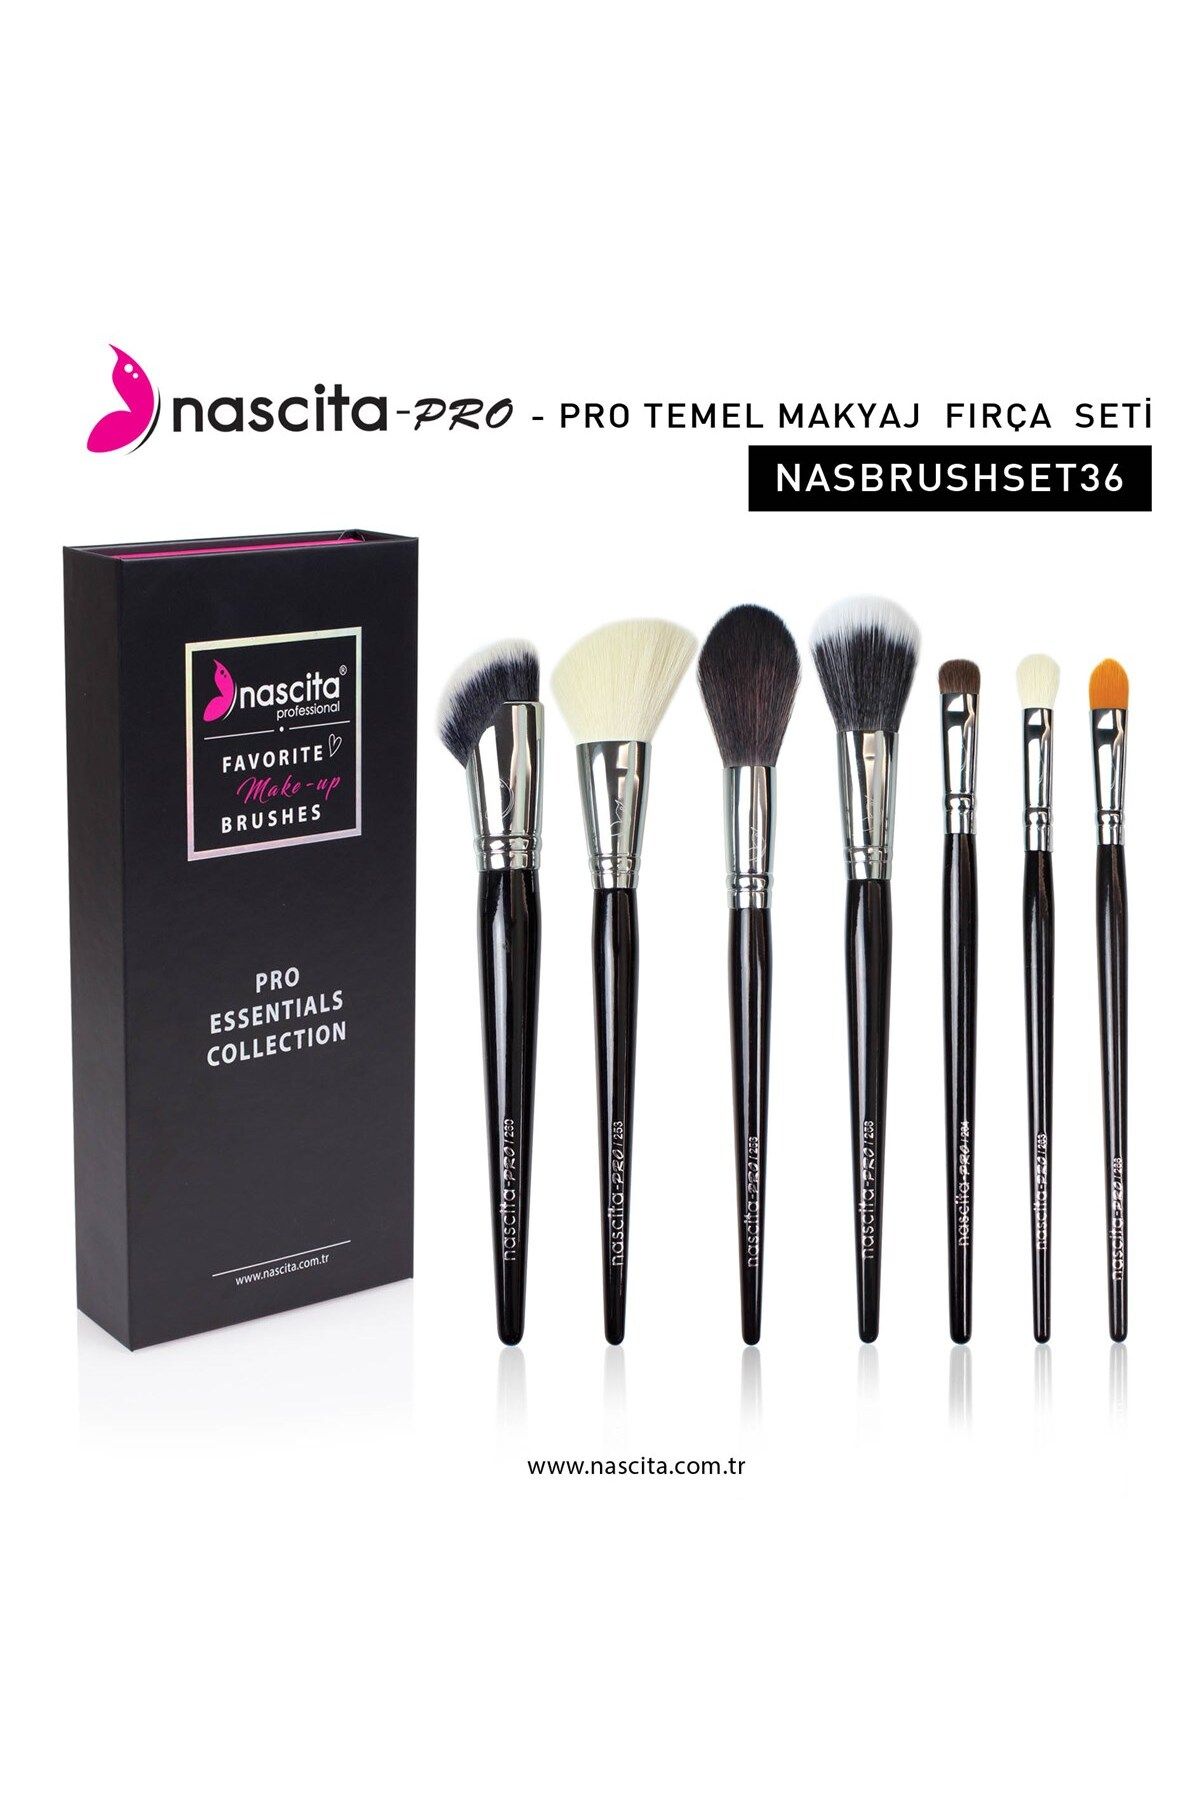 Nascita Pro Essentials Collection Fırça Seti Nasbrushset36